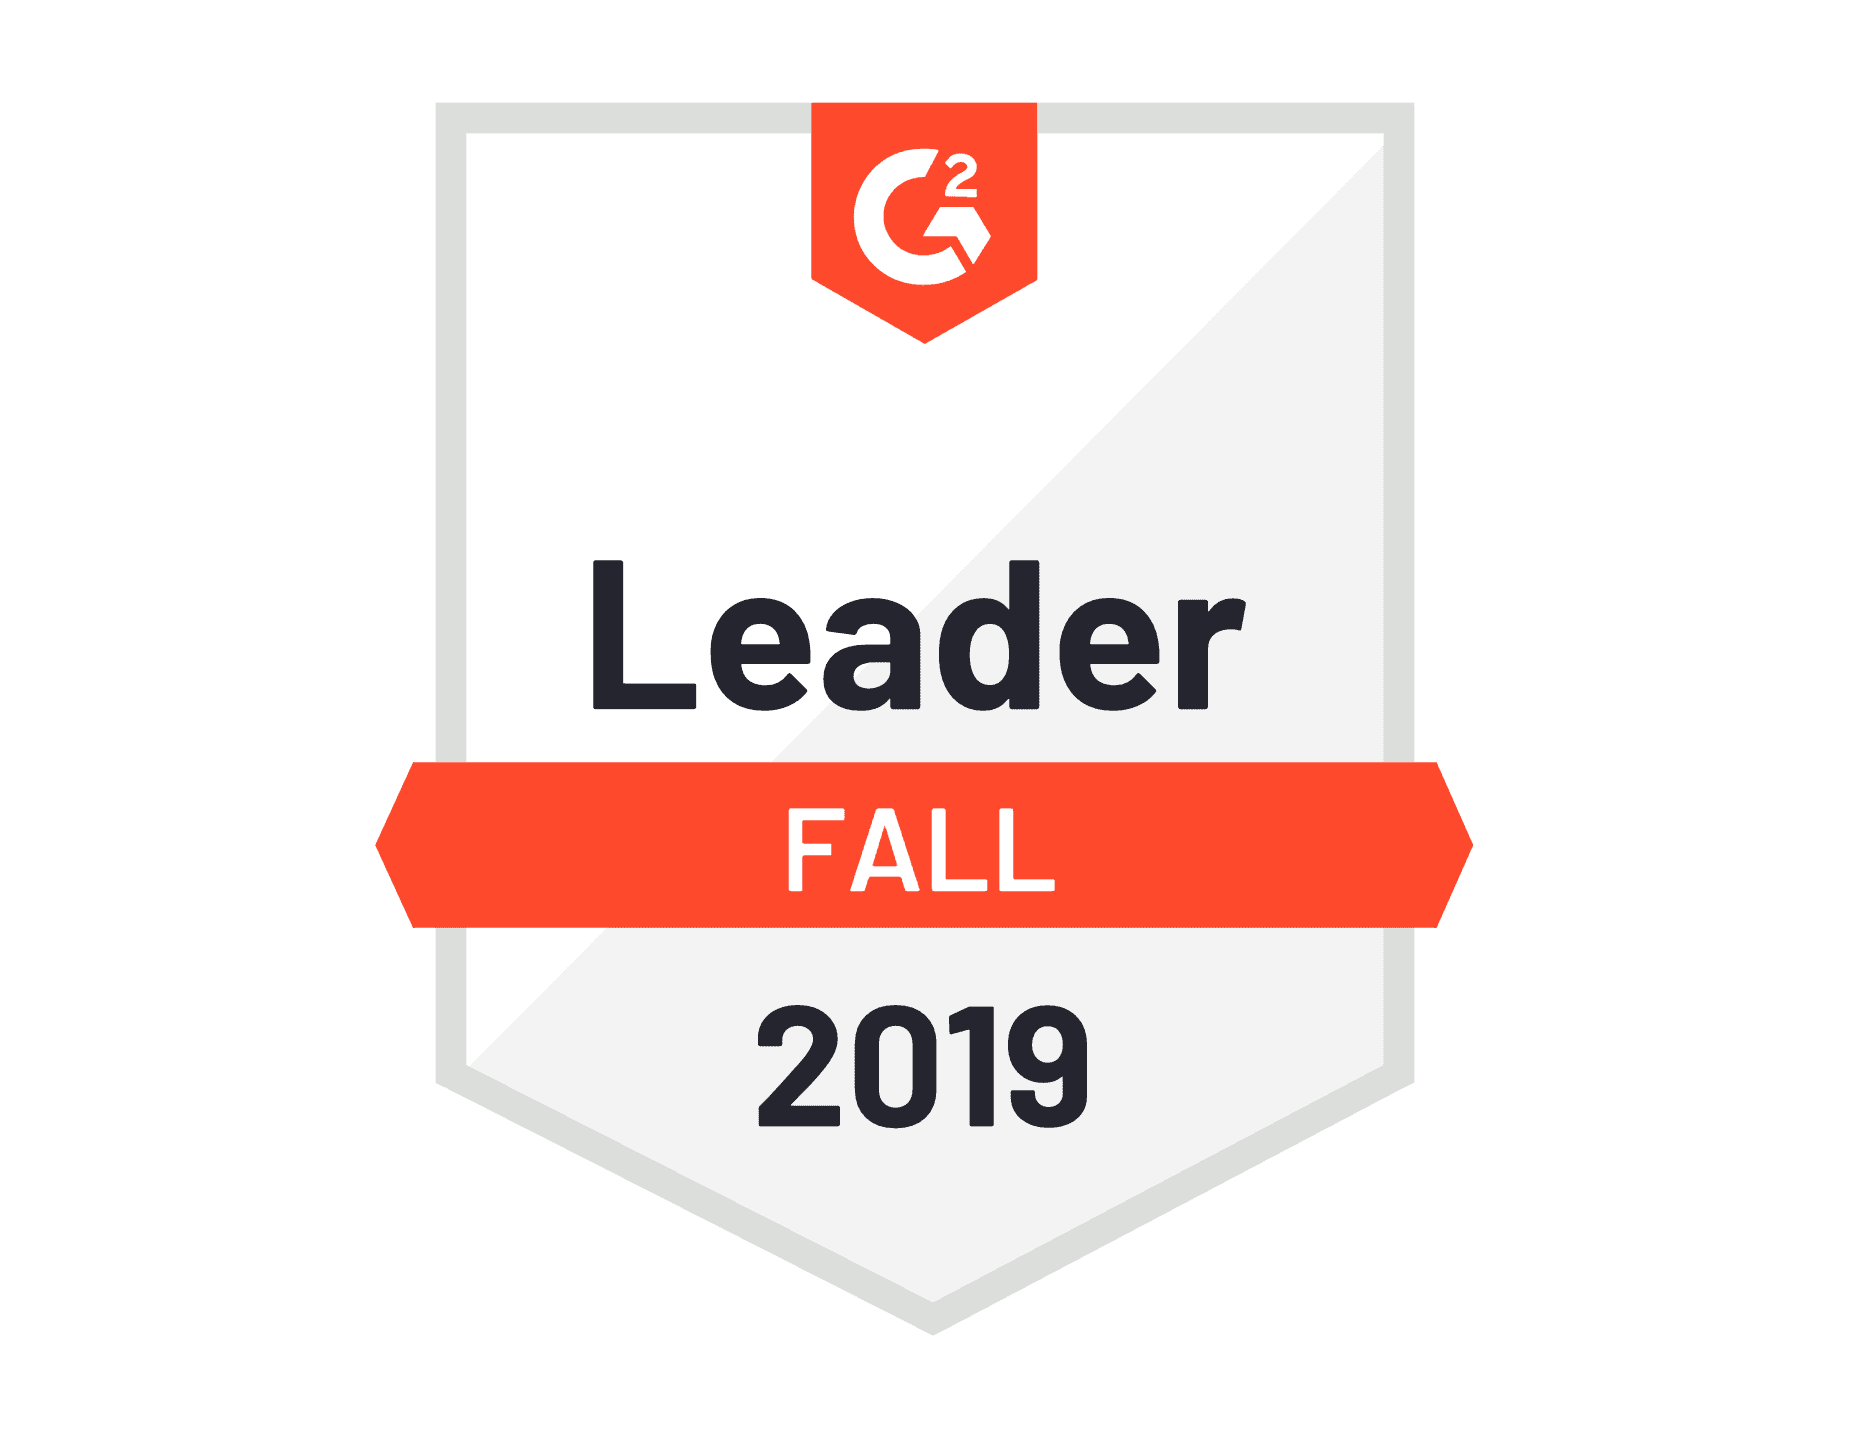 "Leader, Fall 2019"